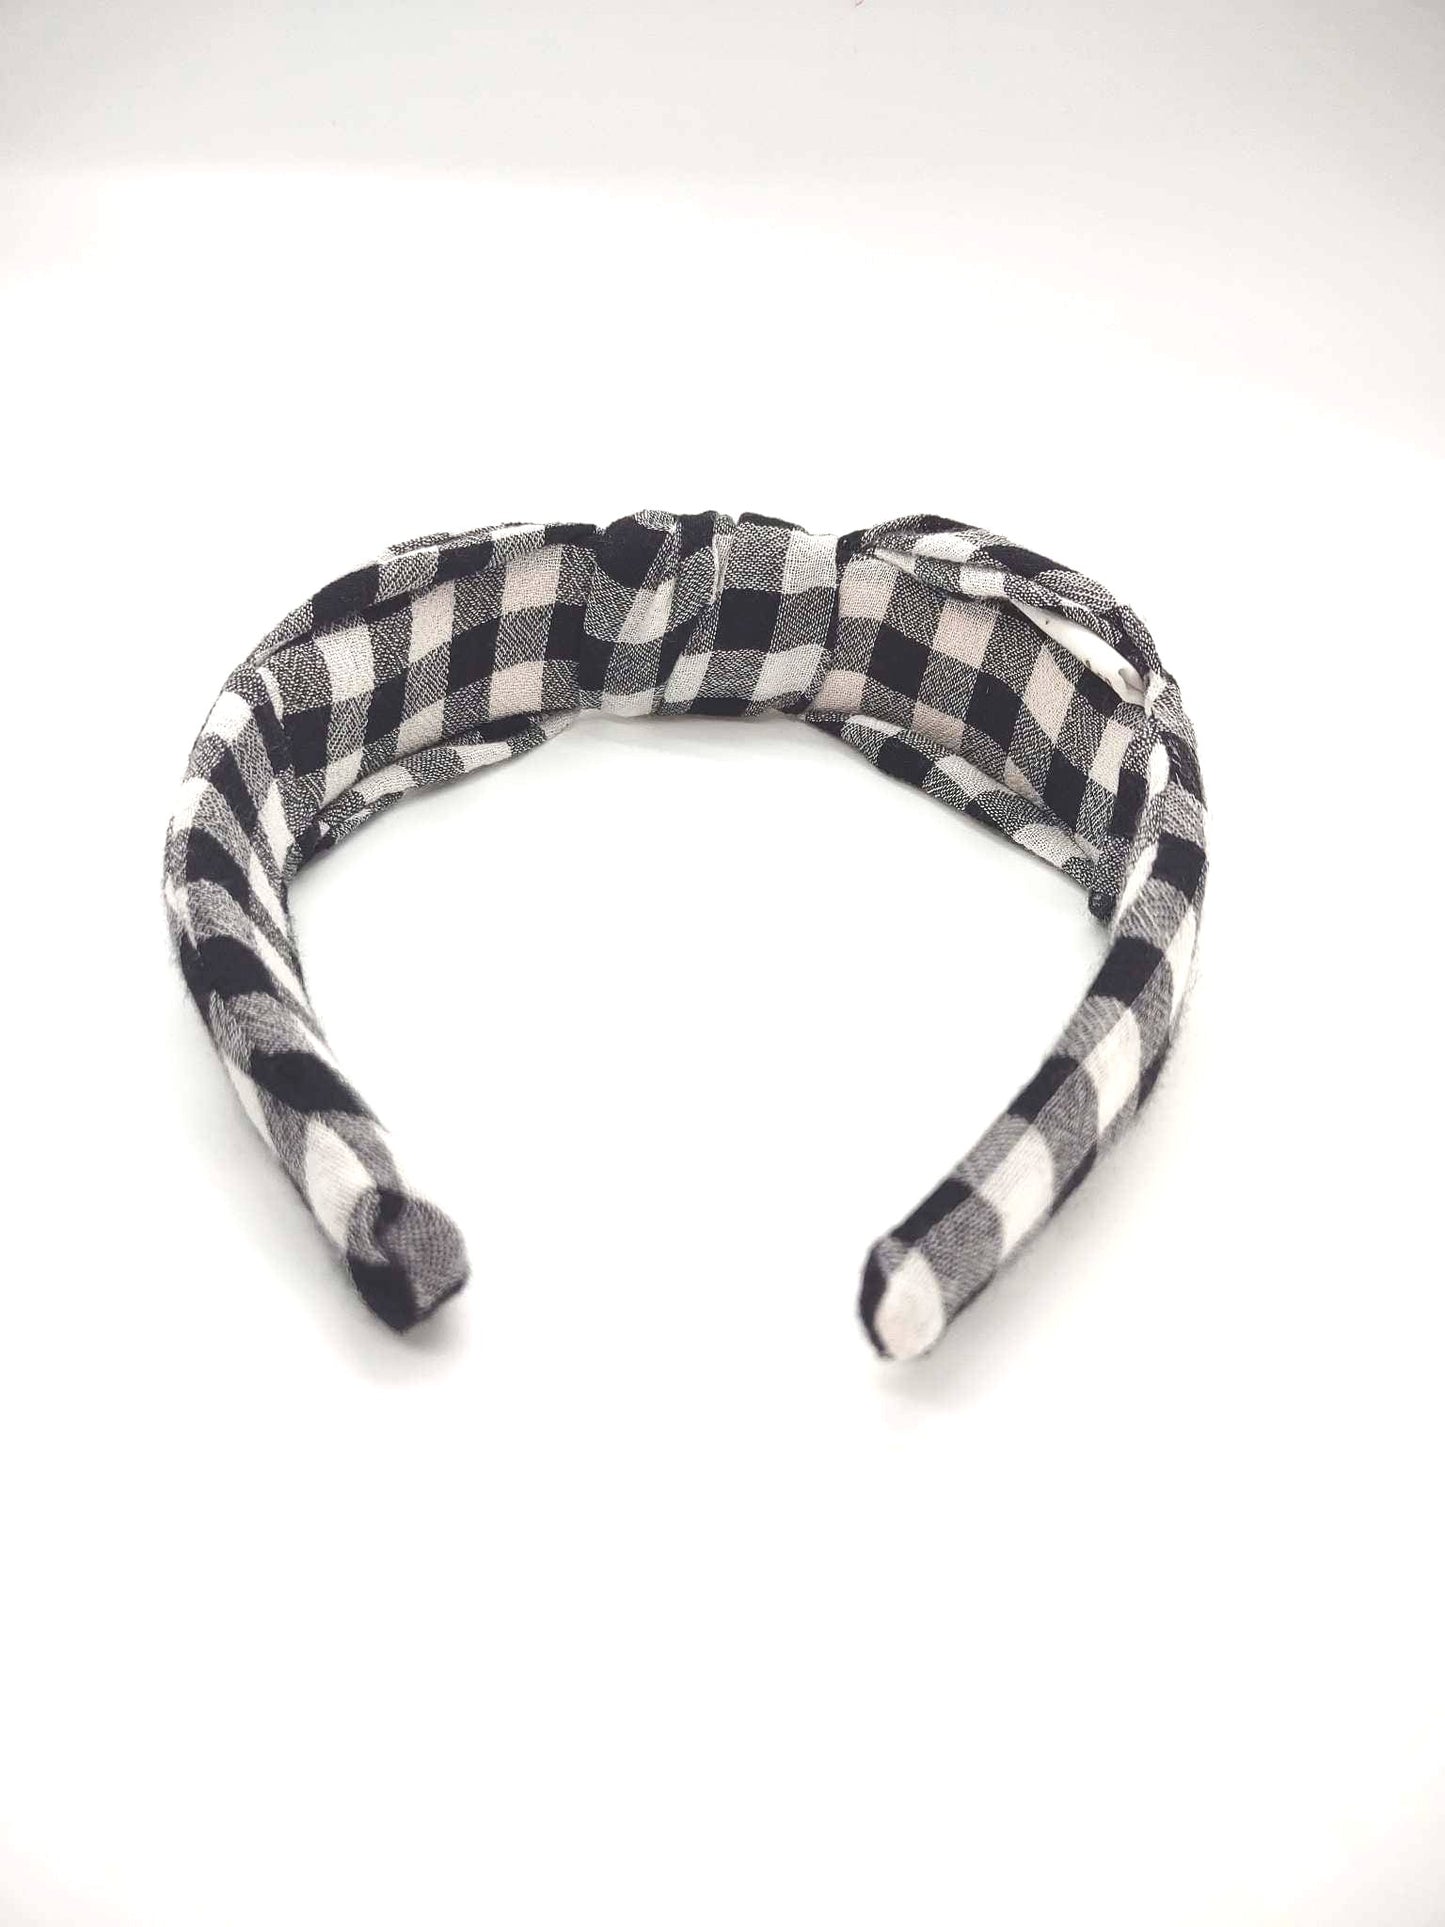 Checker knotted headband